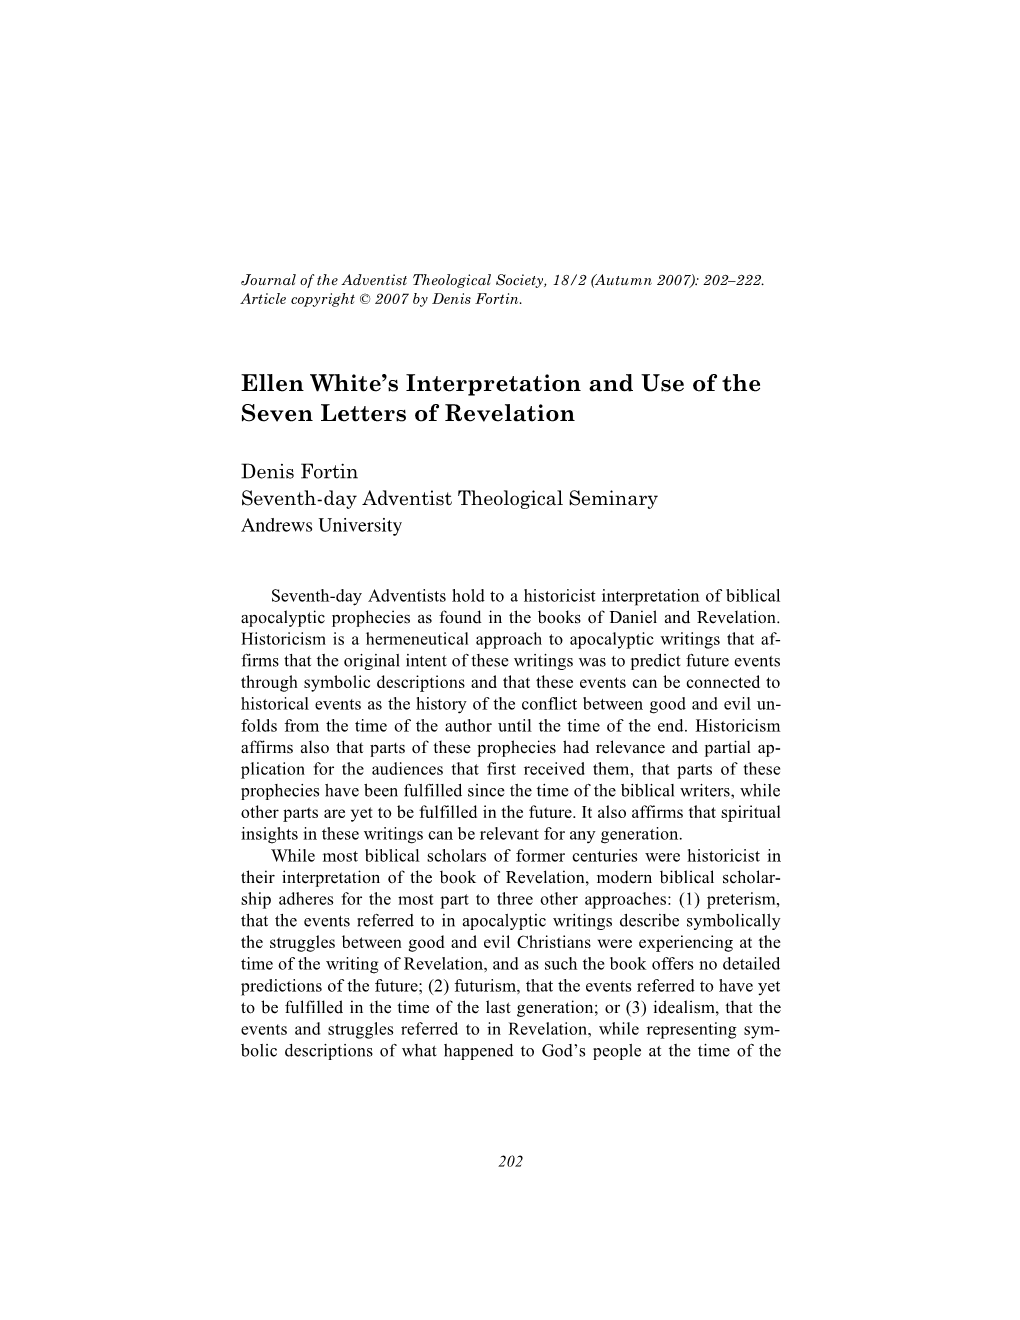 Ellen White's Interpretation and Use of the Seven Letters of Revelation